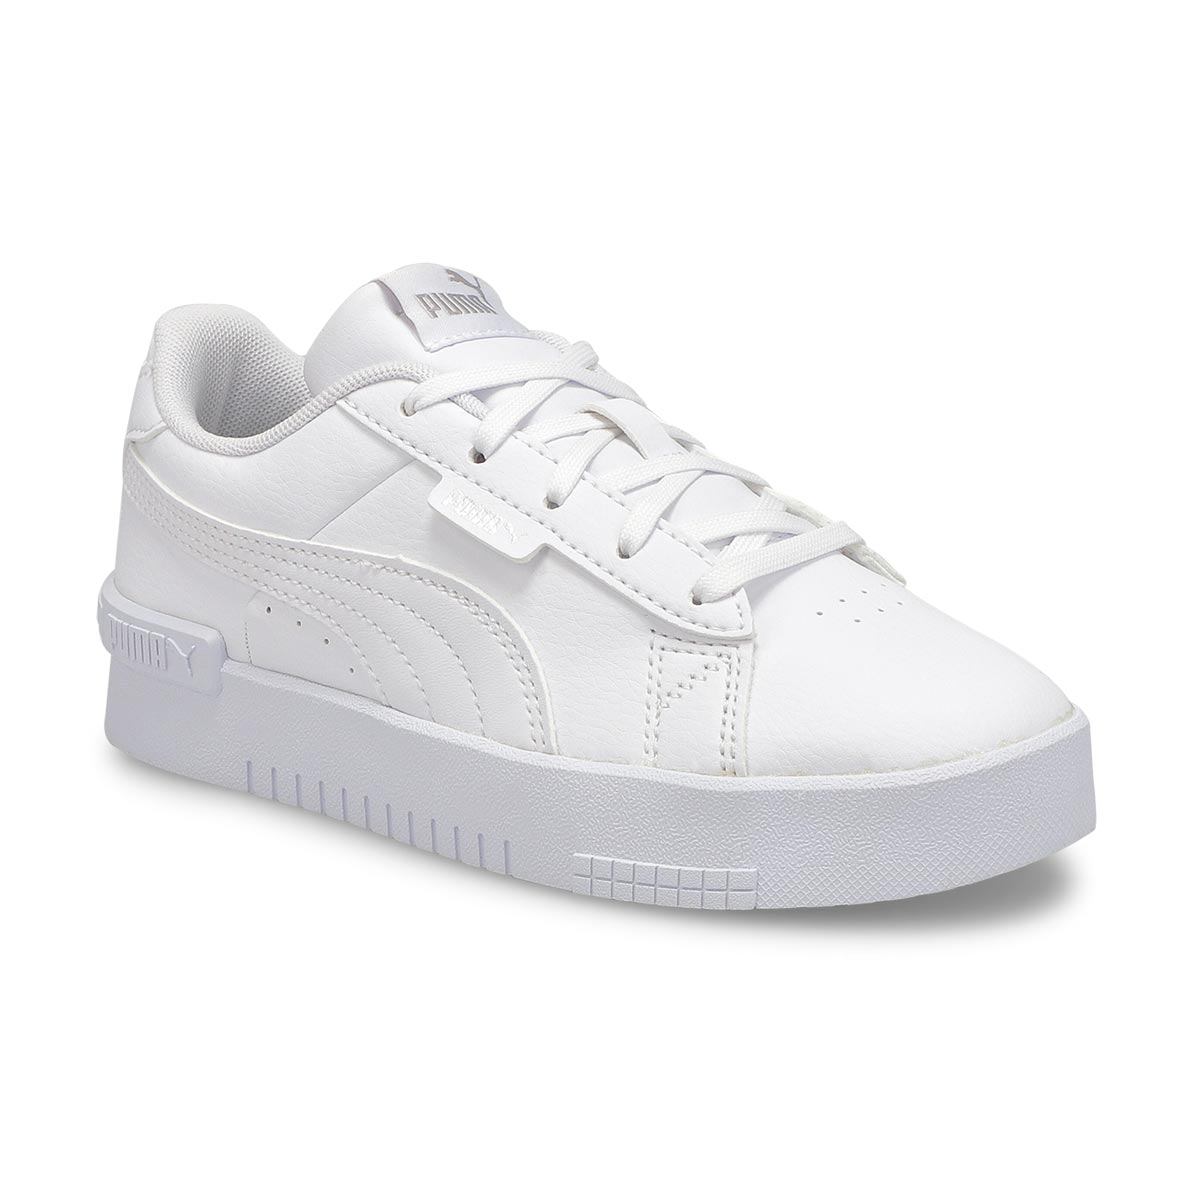 Girls' Puma Jada PS Sneaker - White/Silver